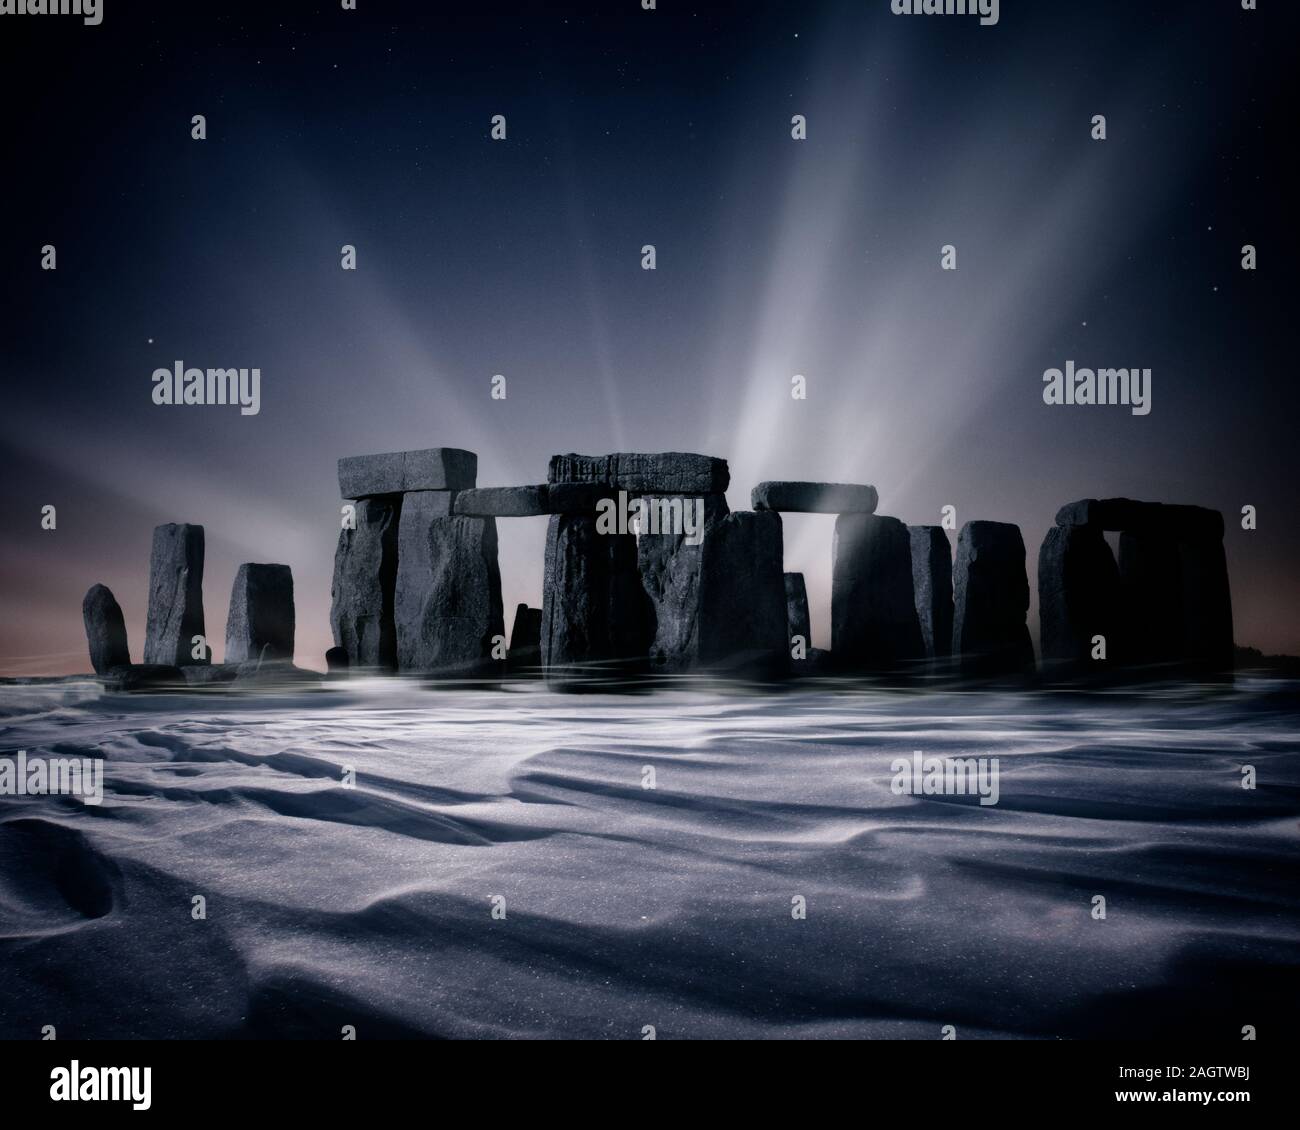 GB - WILTSHIRE: inverno a Stonehenge preistorico Foto Stock